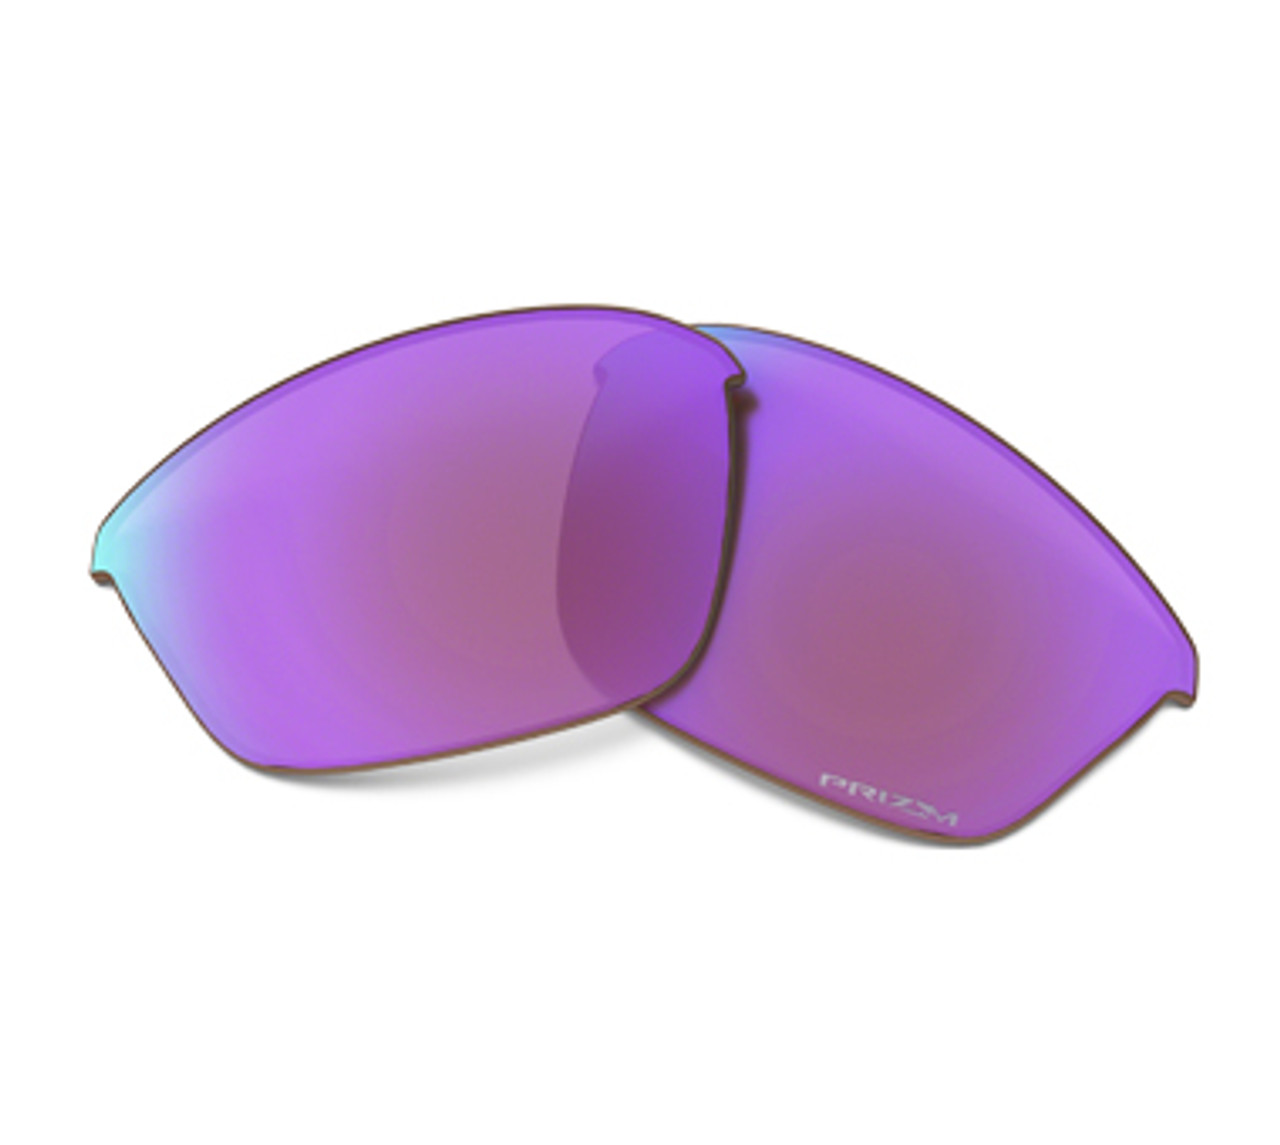 Buy Sunglasses Lens Replacement online | Lazada.com.my